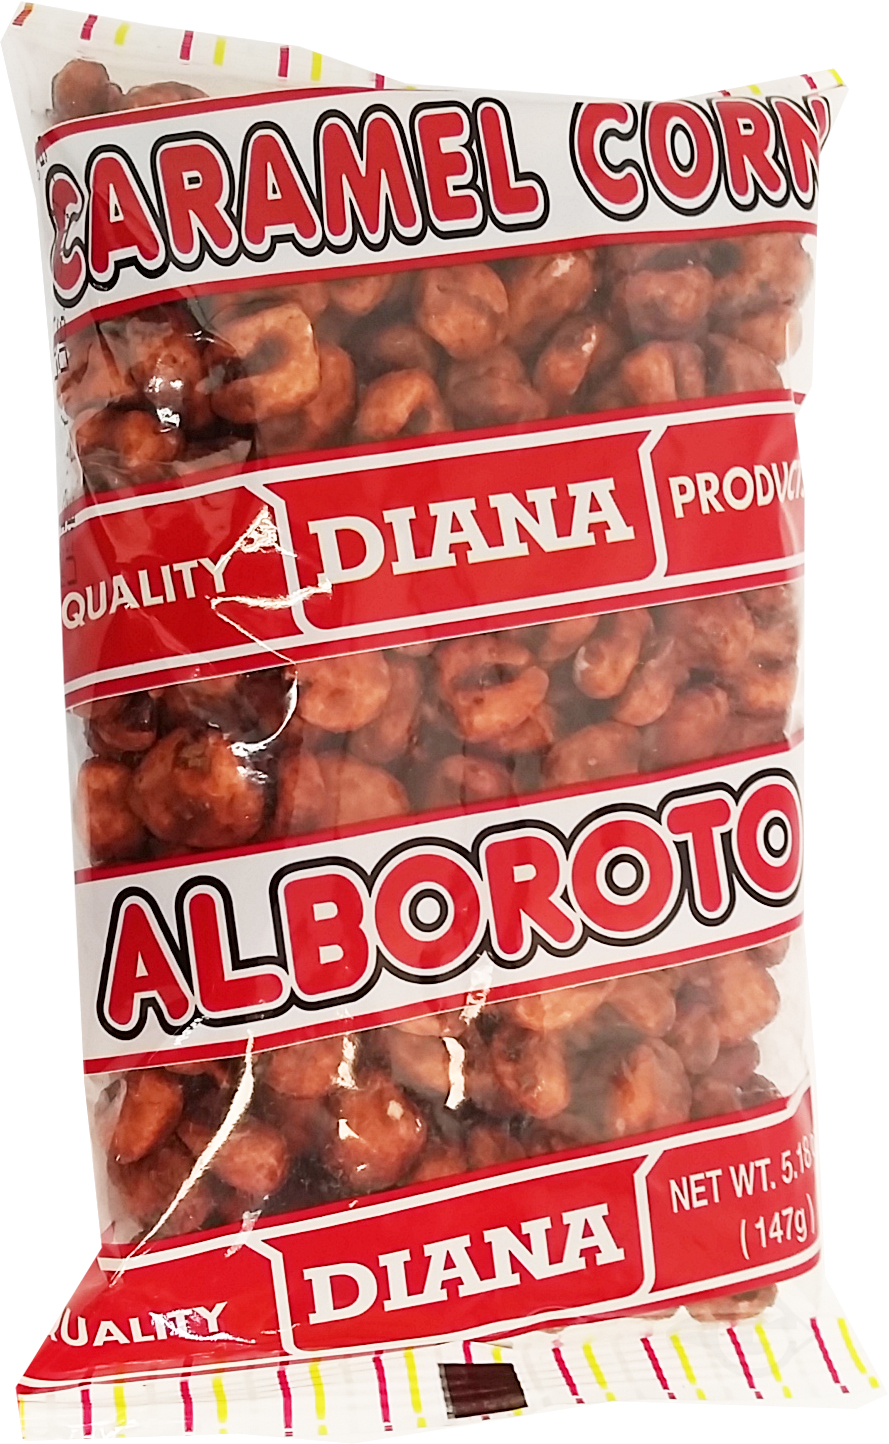 Prodiana Caramel Corn Snack 5.18 oz - Alboroto (Pack of 24) - image 1 of 2